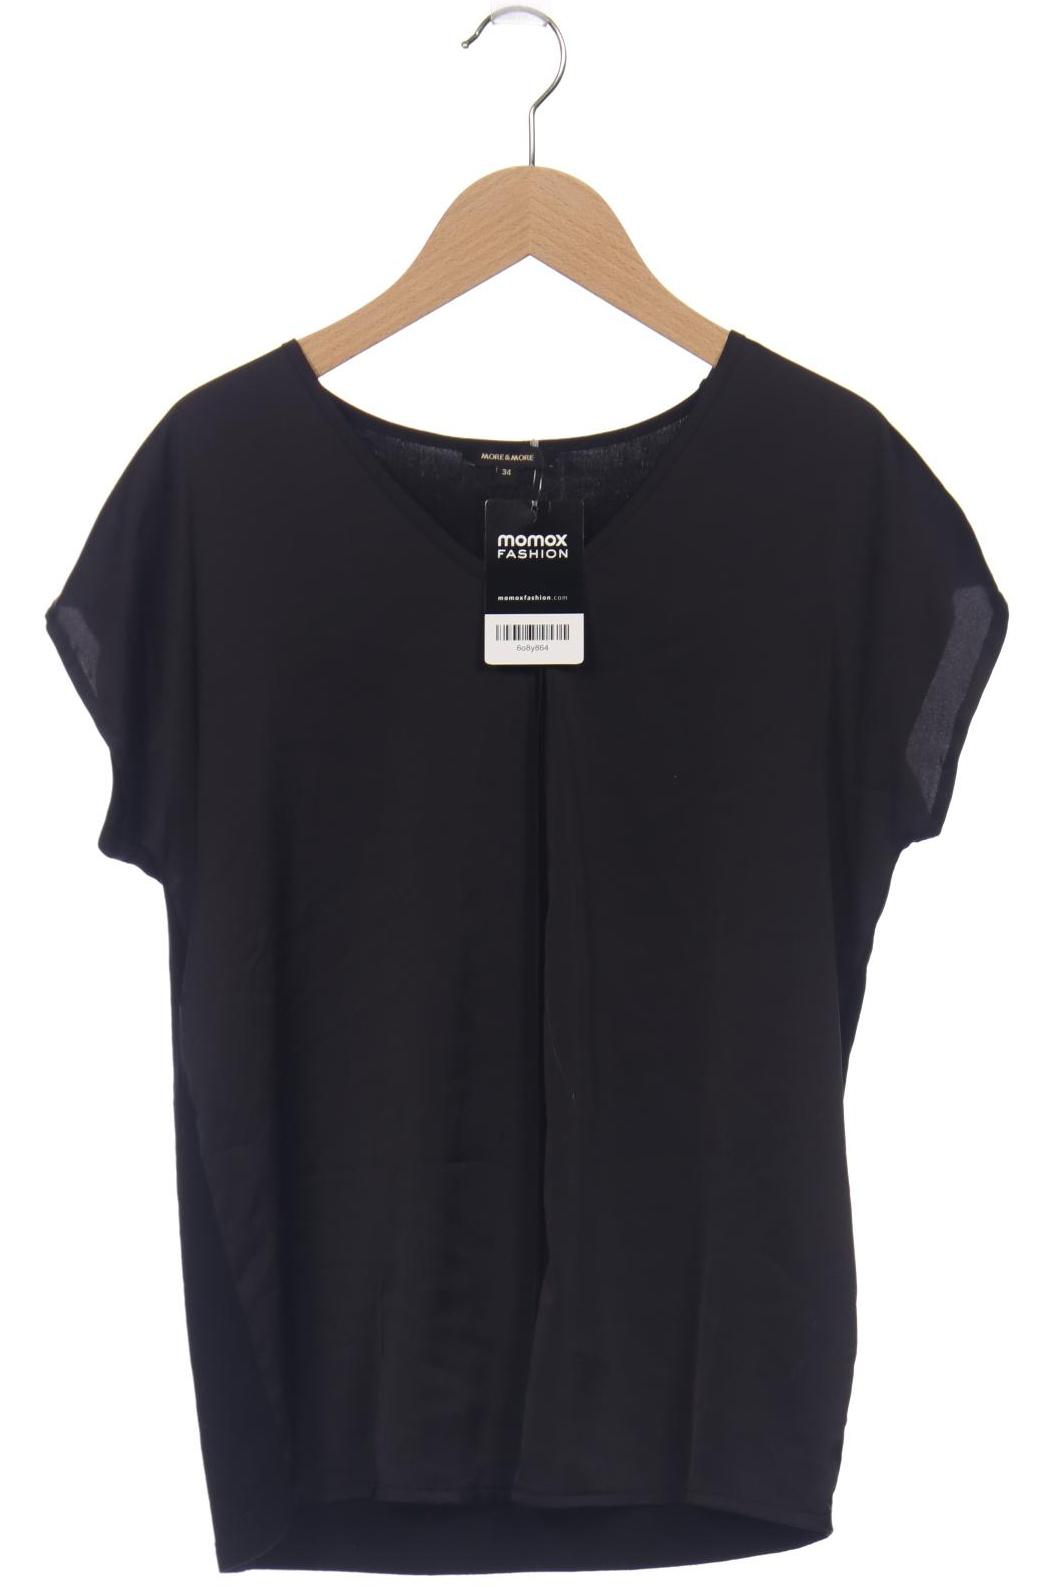 More & More Damen T-Shirt, schwarz von MORE & MORE